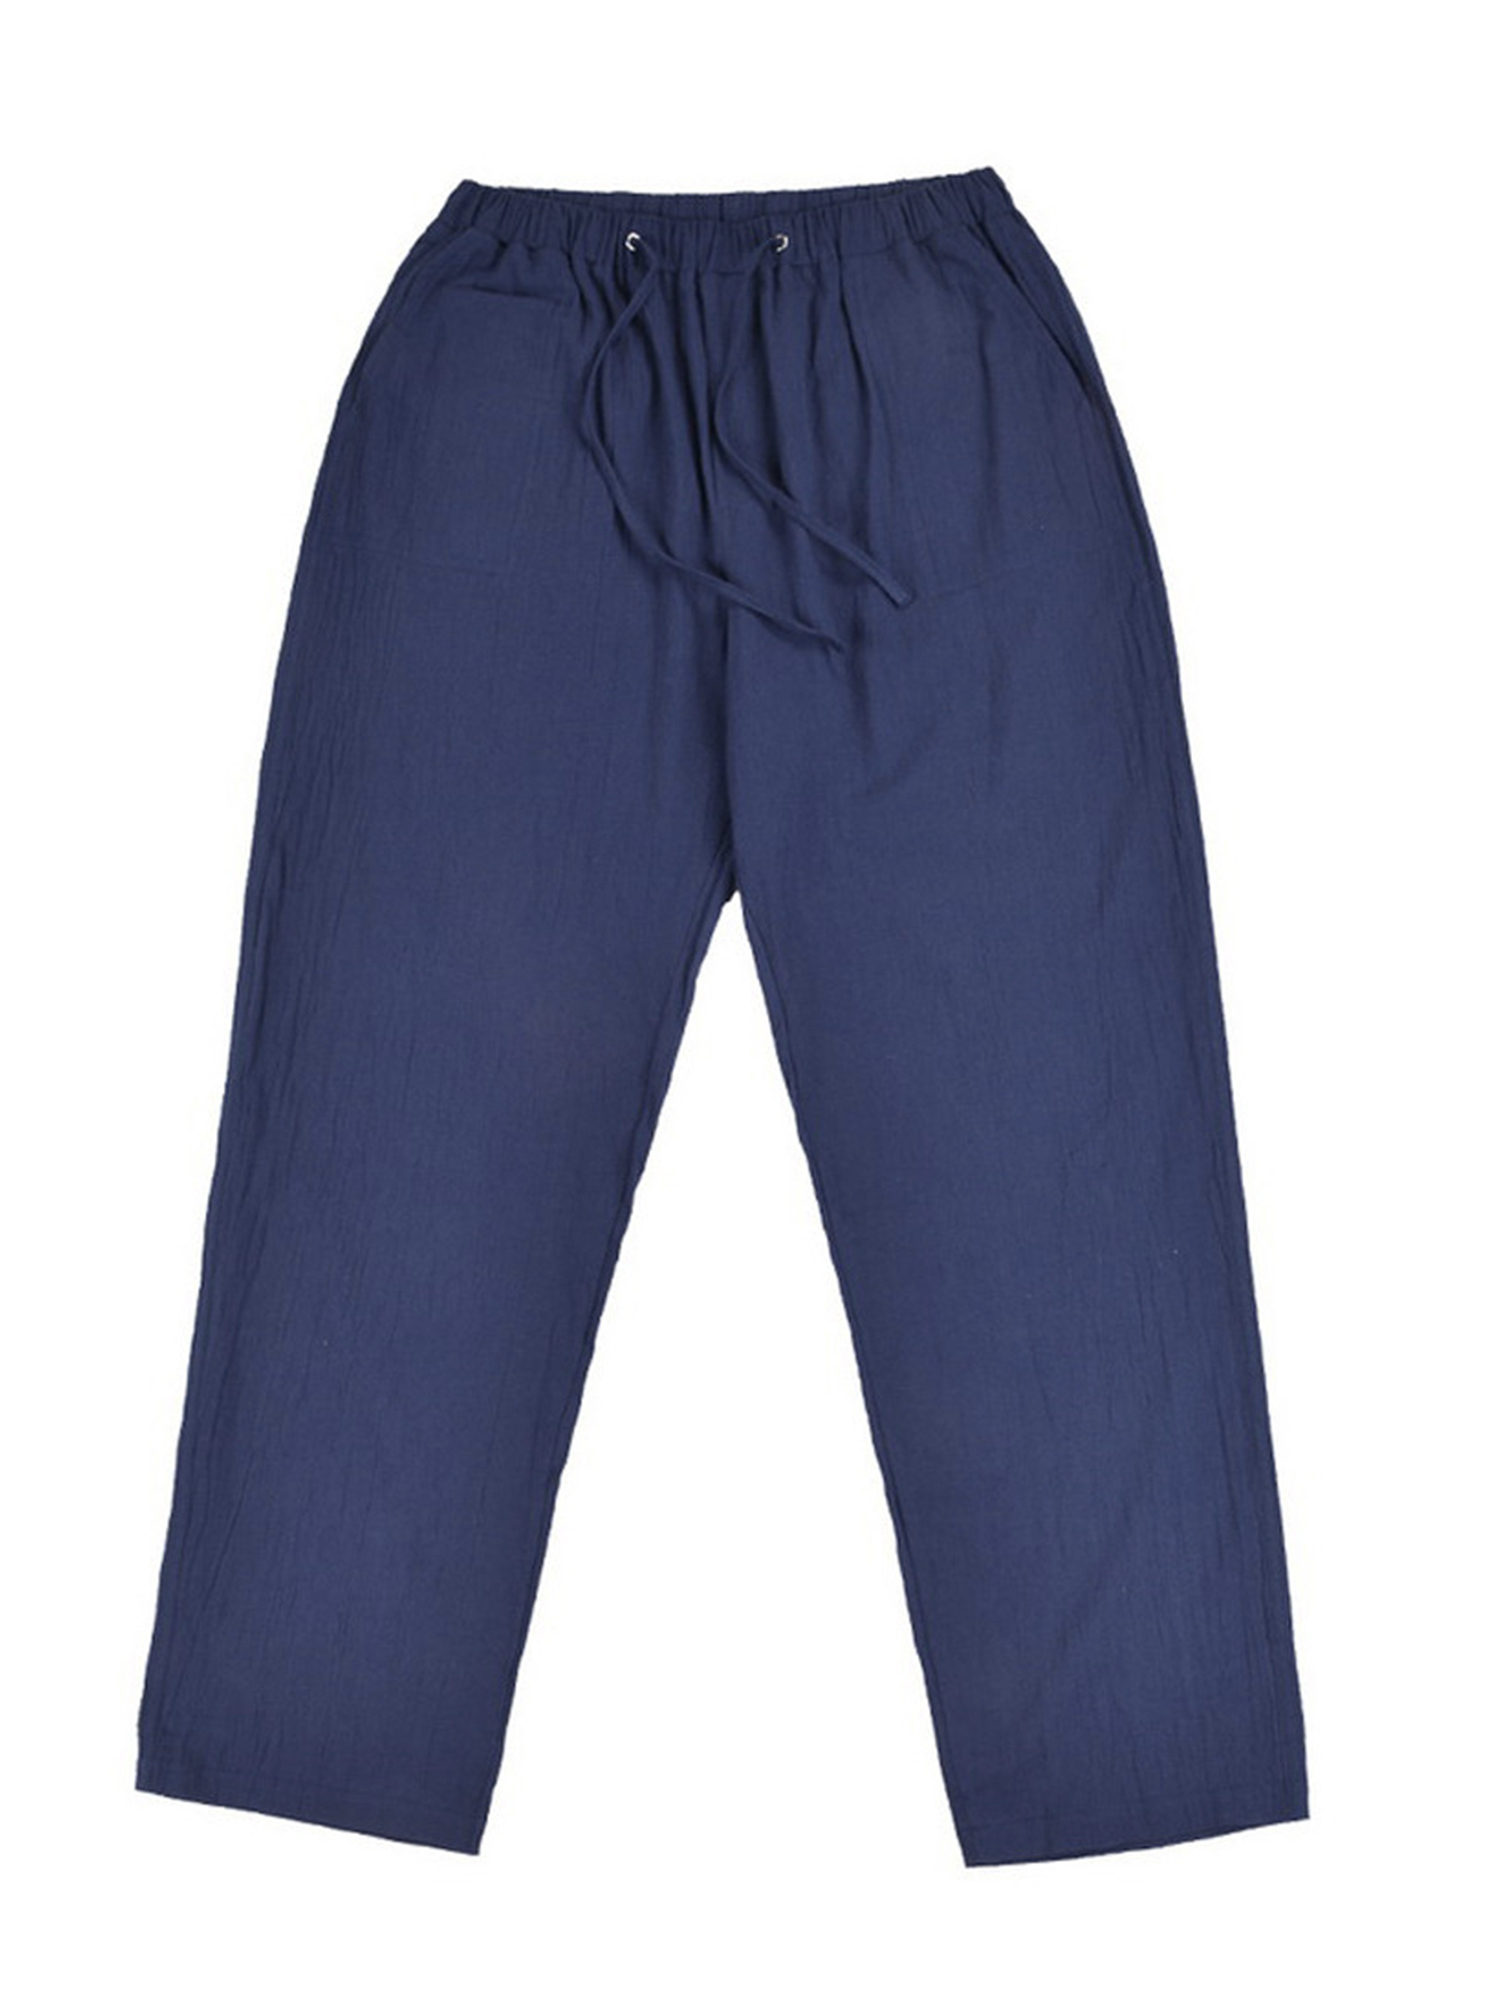 Frontwalk Men's Cotton Linen Pants Elastic Waist Drawstring Long Pants ...